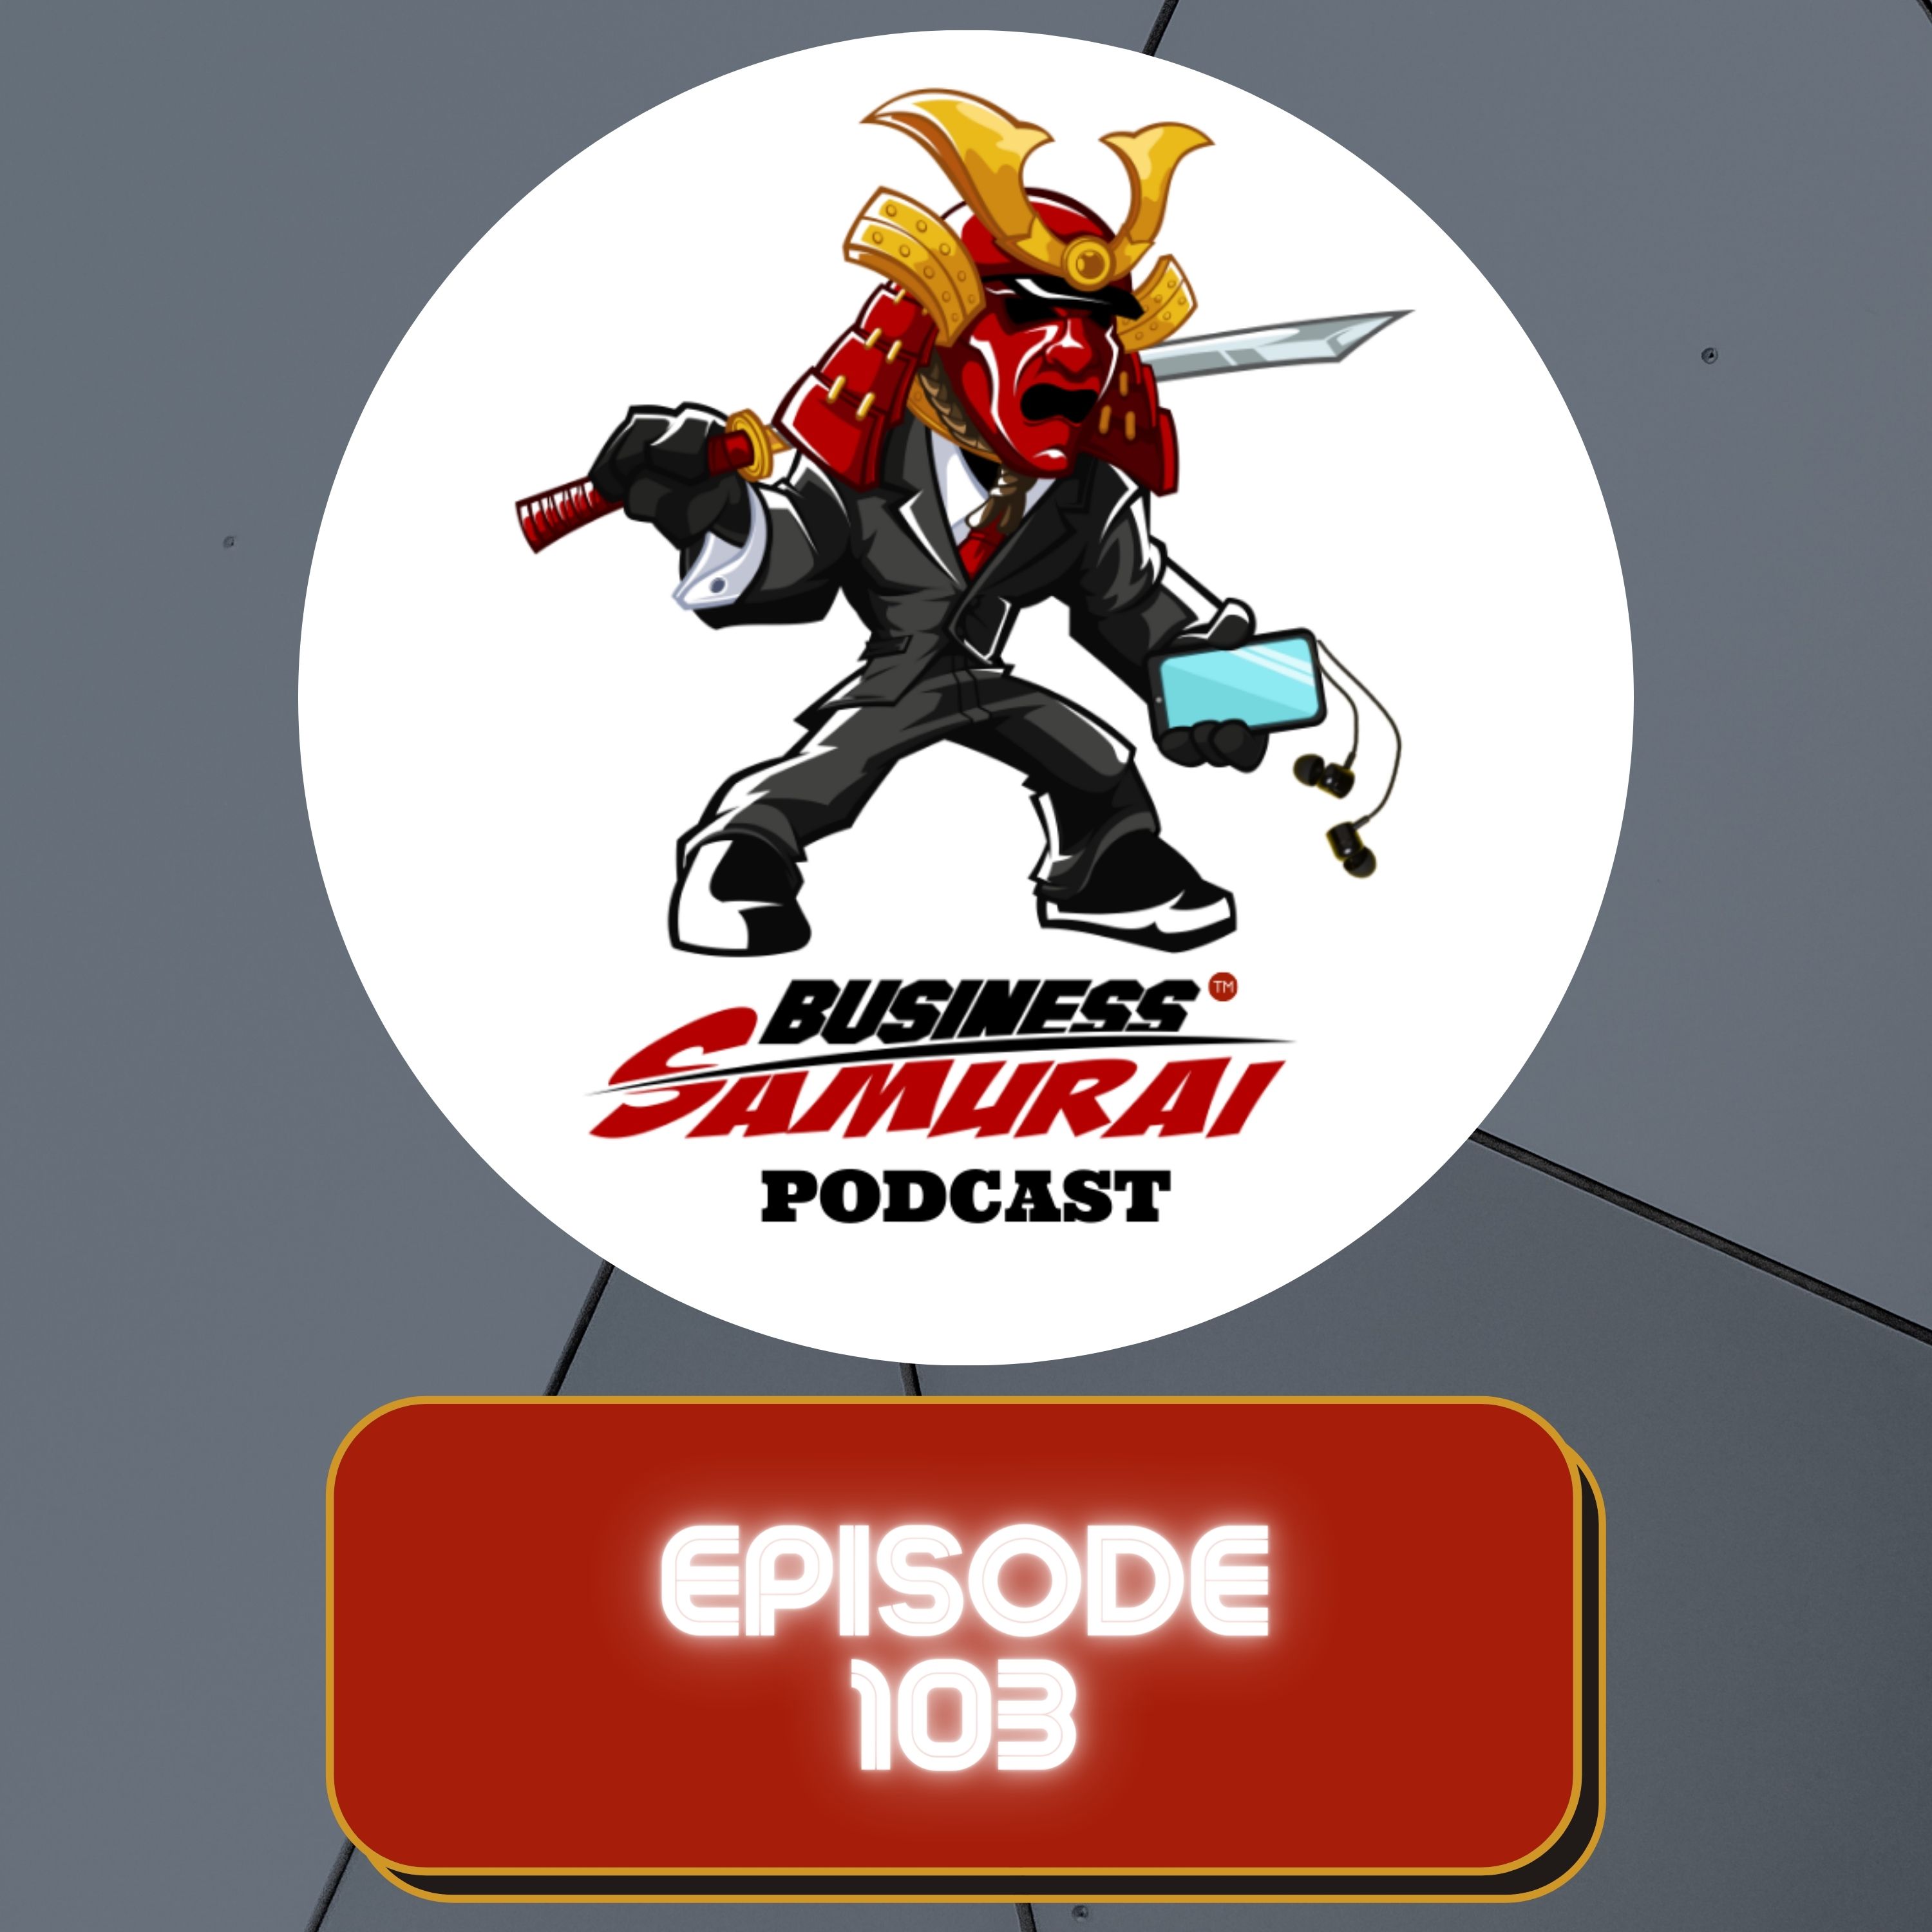 Artwork for podcast The Business Samurai